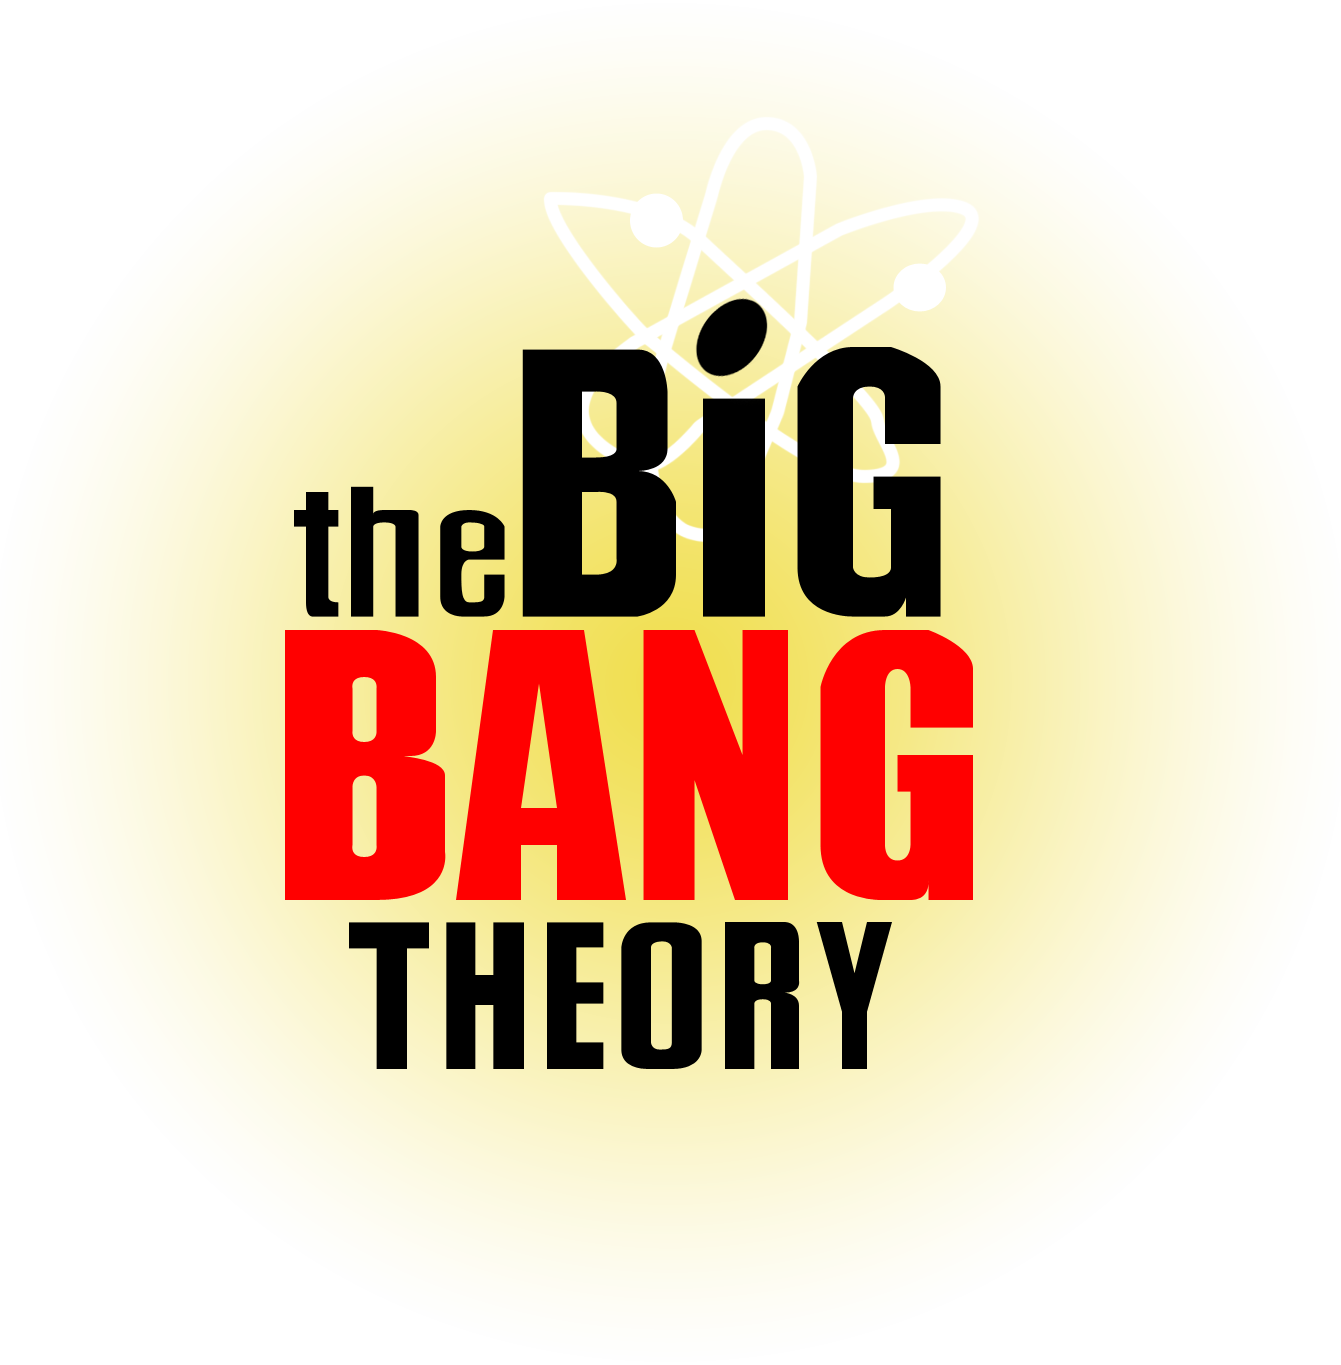 Download PNG image - The Big Bang Theory PNG Transparent 